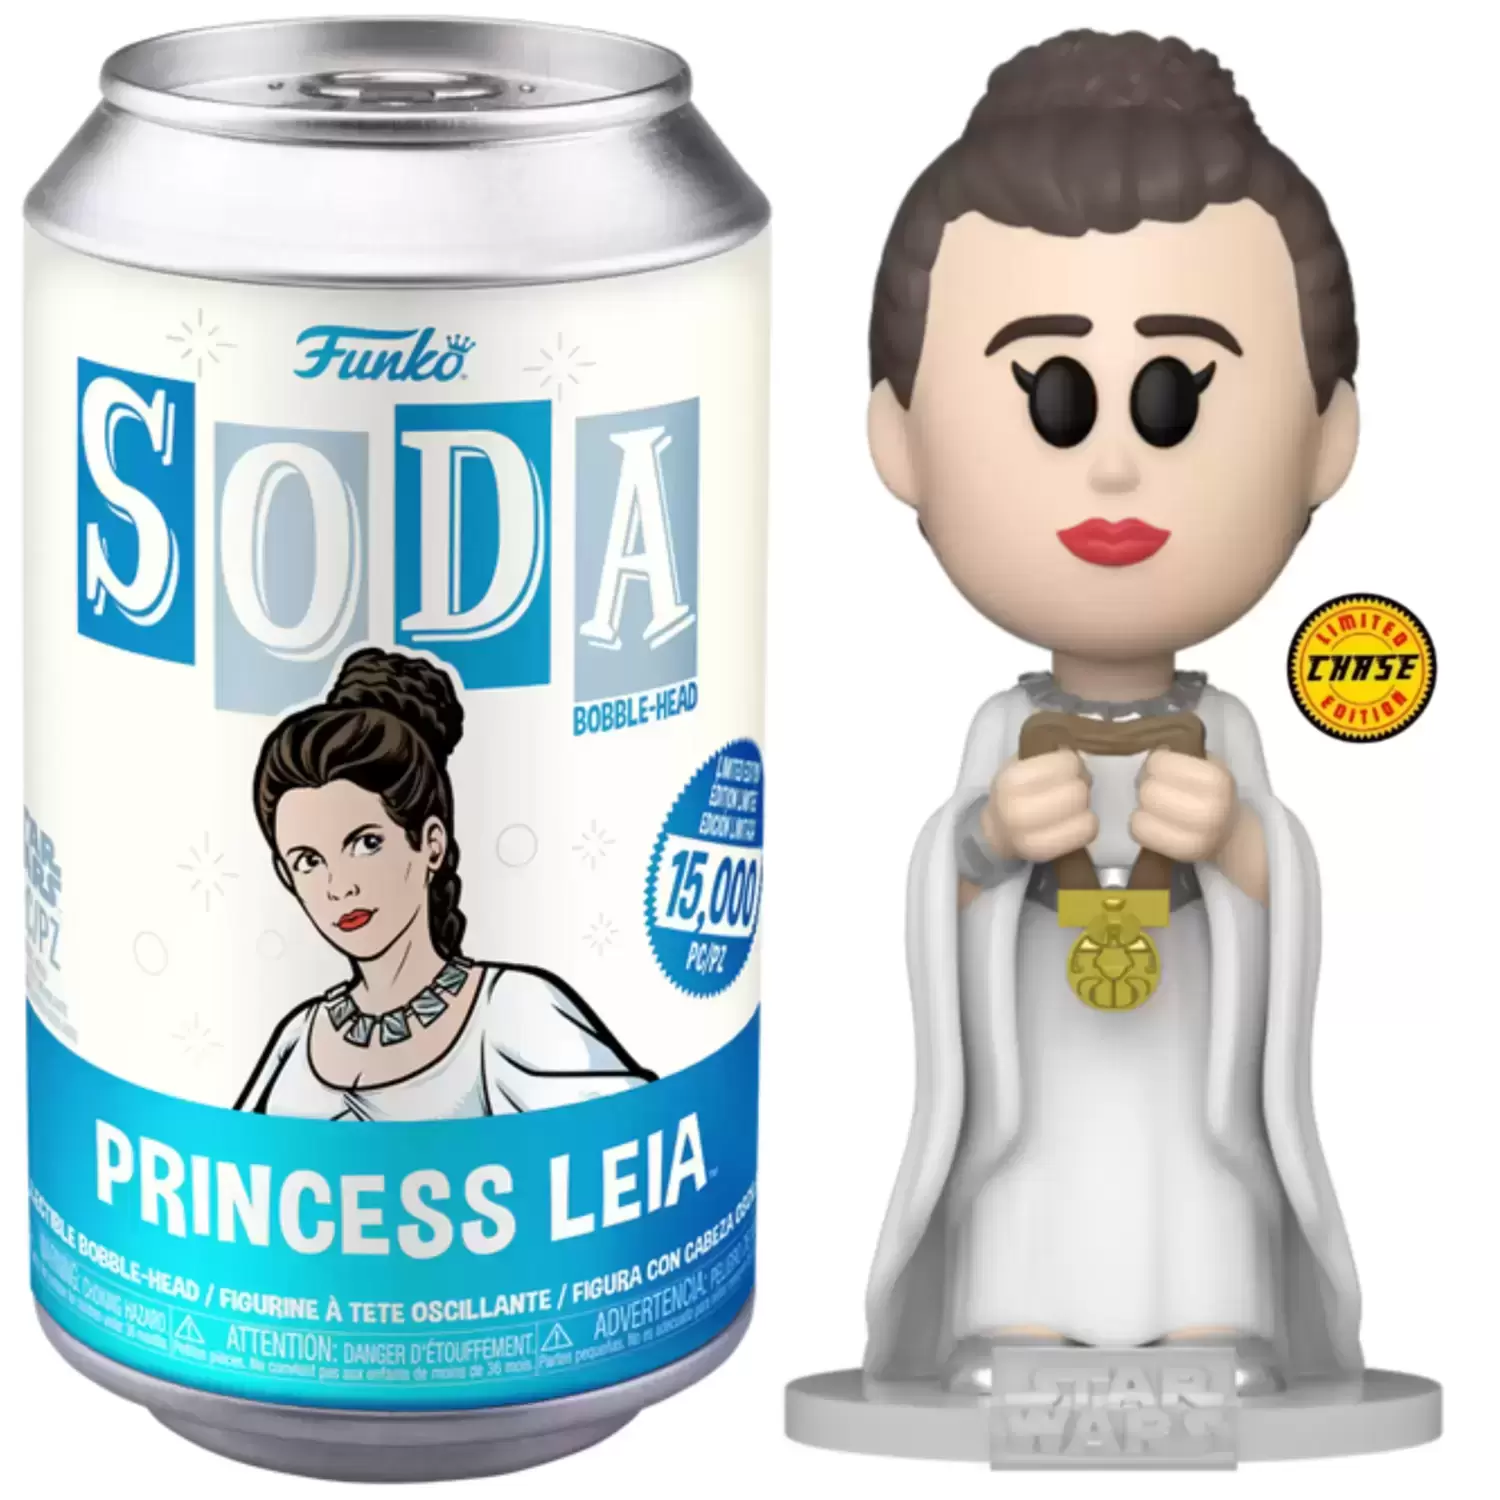 Vinyl Soda! - Star Wars - Princess Leia Chase